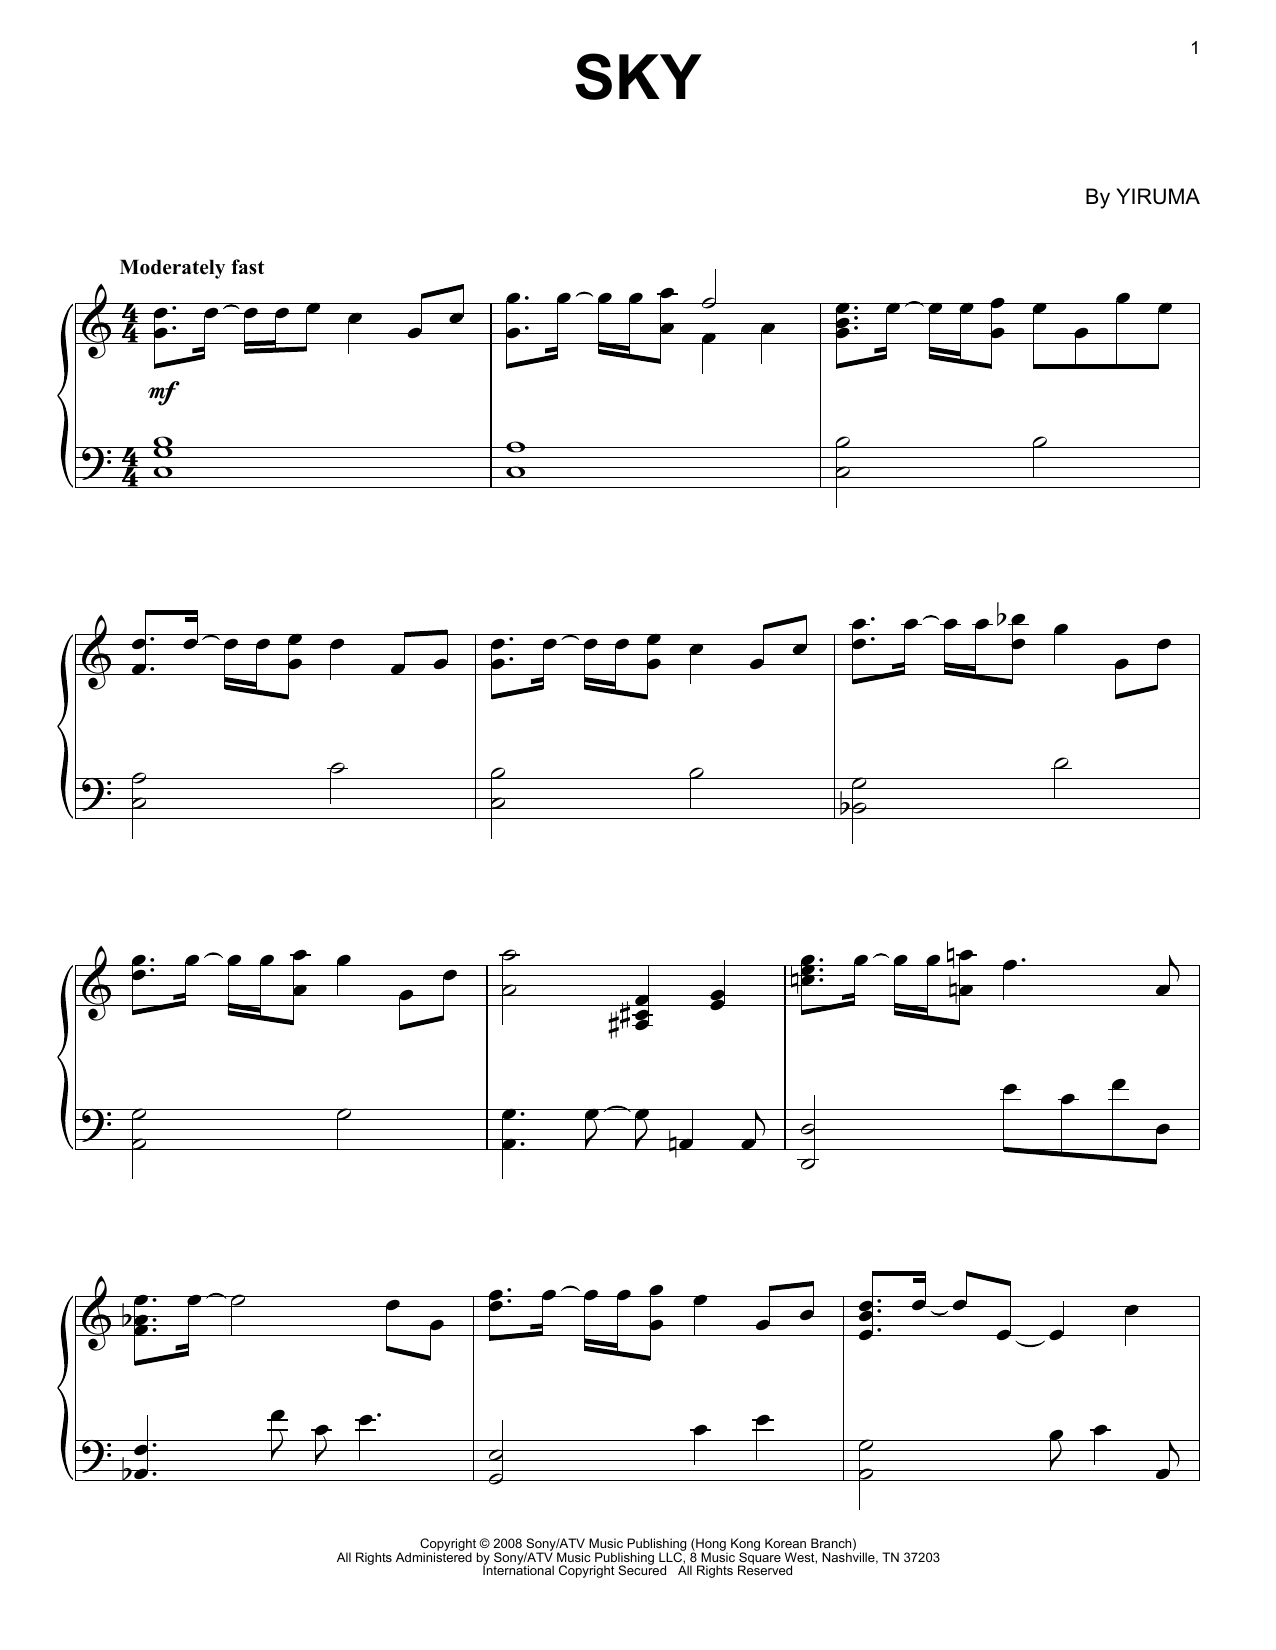 Yiruma Sky Sheet Music Notes & Chords for Piano - Download or Print PDF